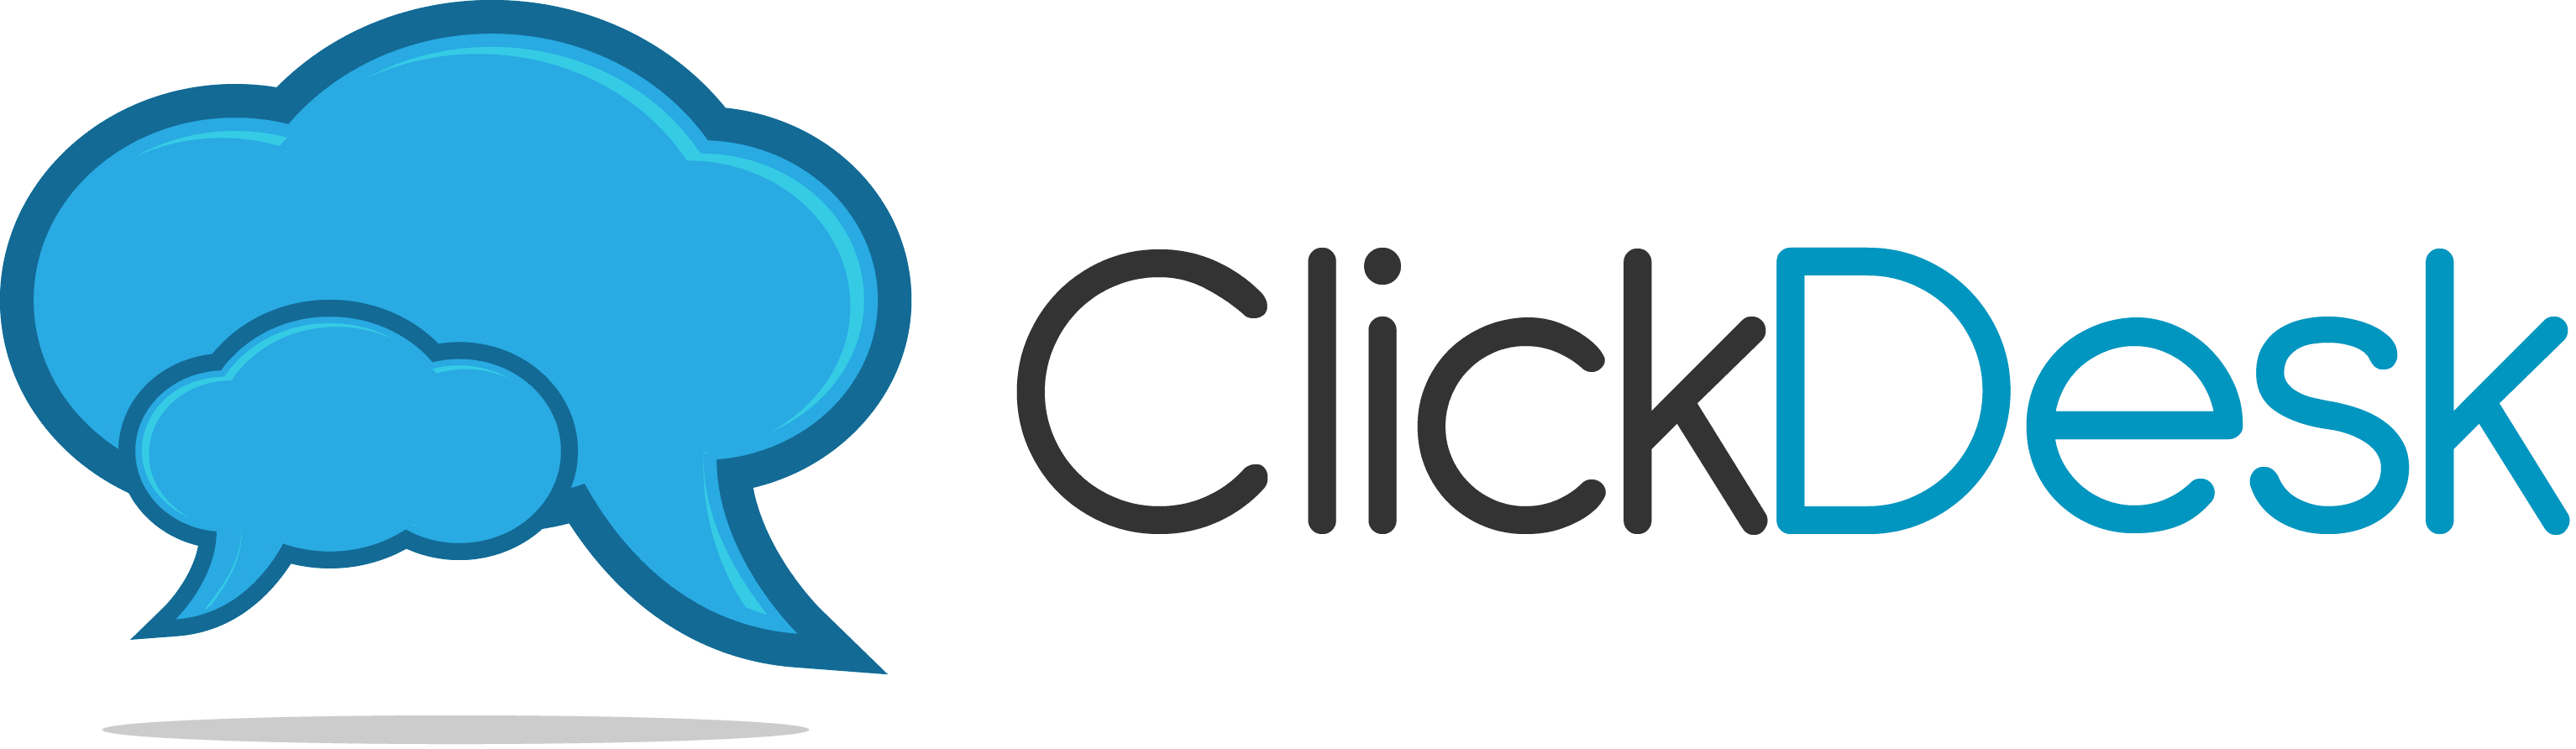 Clickdesk live chat logo